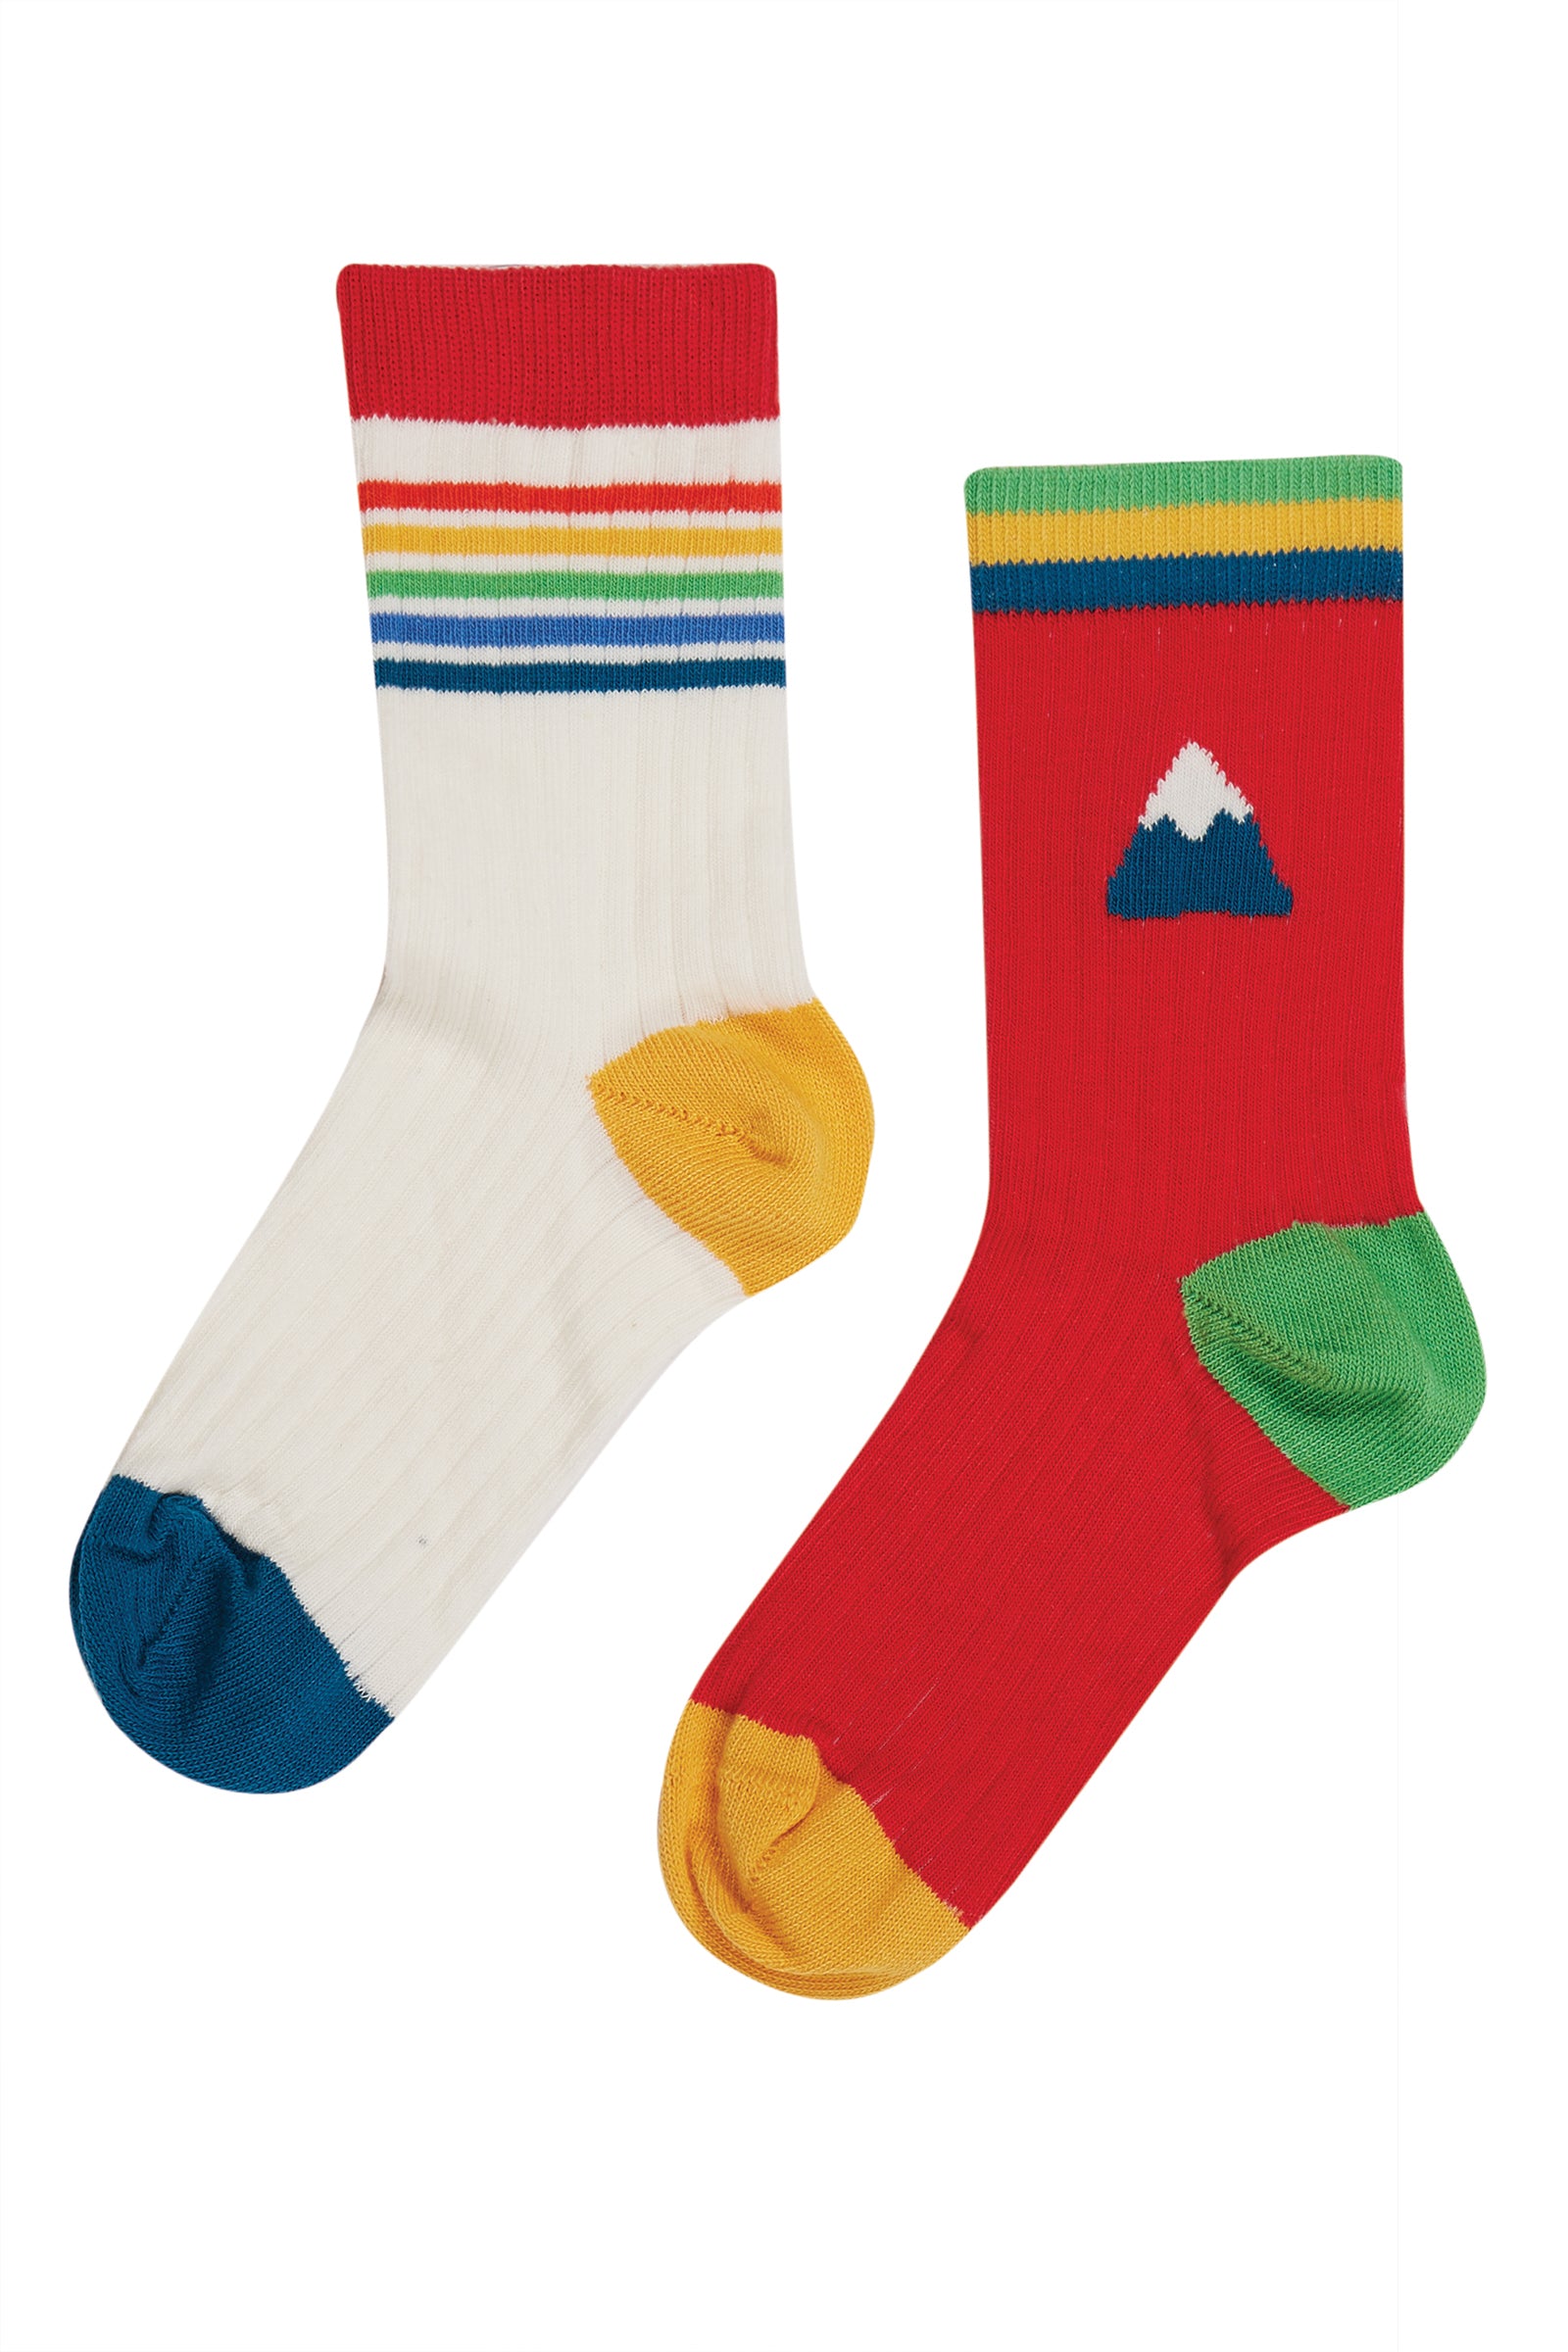 Frugi Raleigh Rib Socks 2 Pack - Red/Mountain *